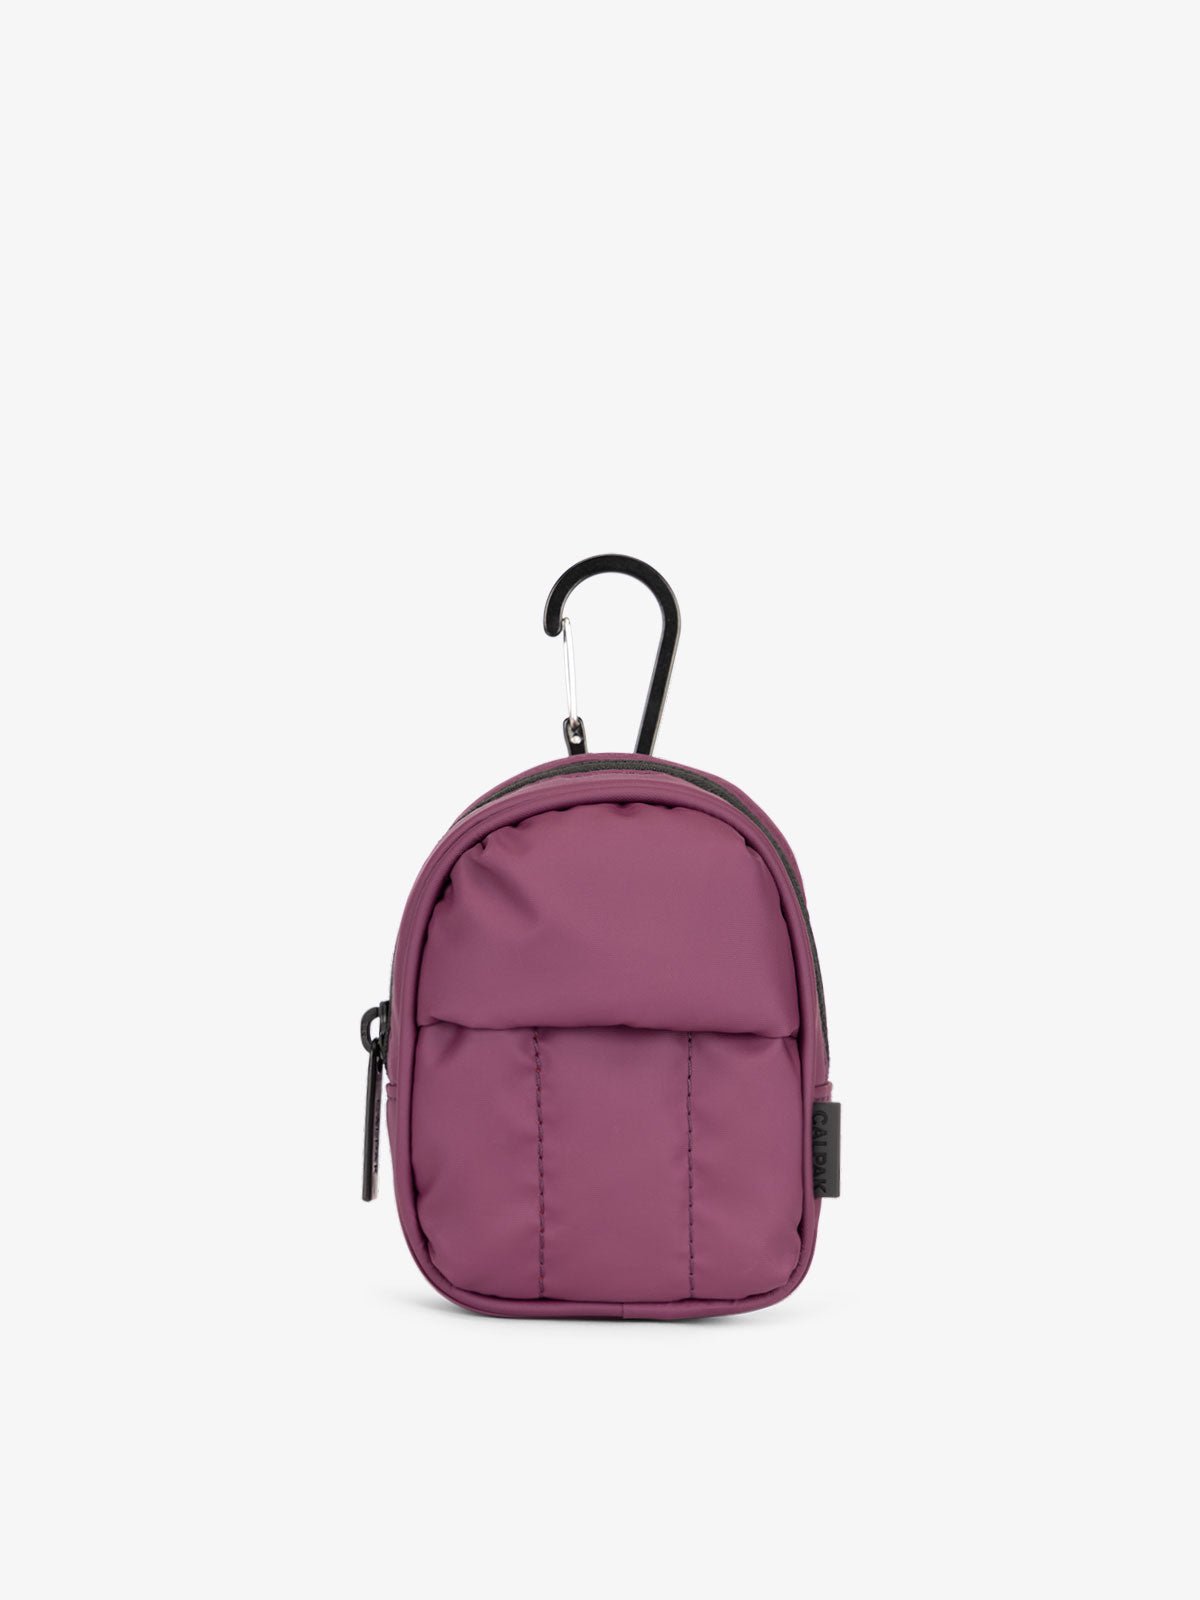 CALPAK Luka key pouch with carabiner clip in purple